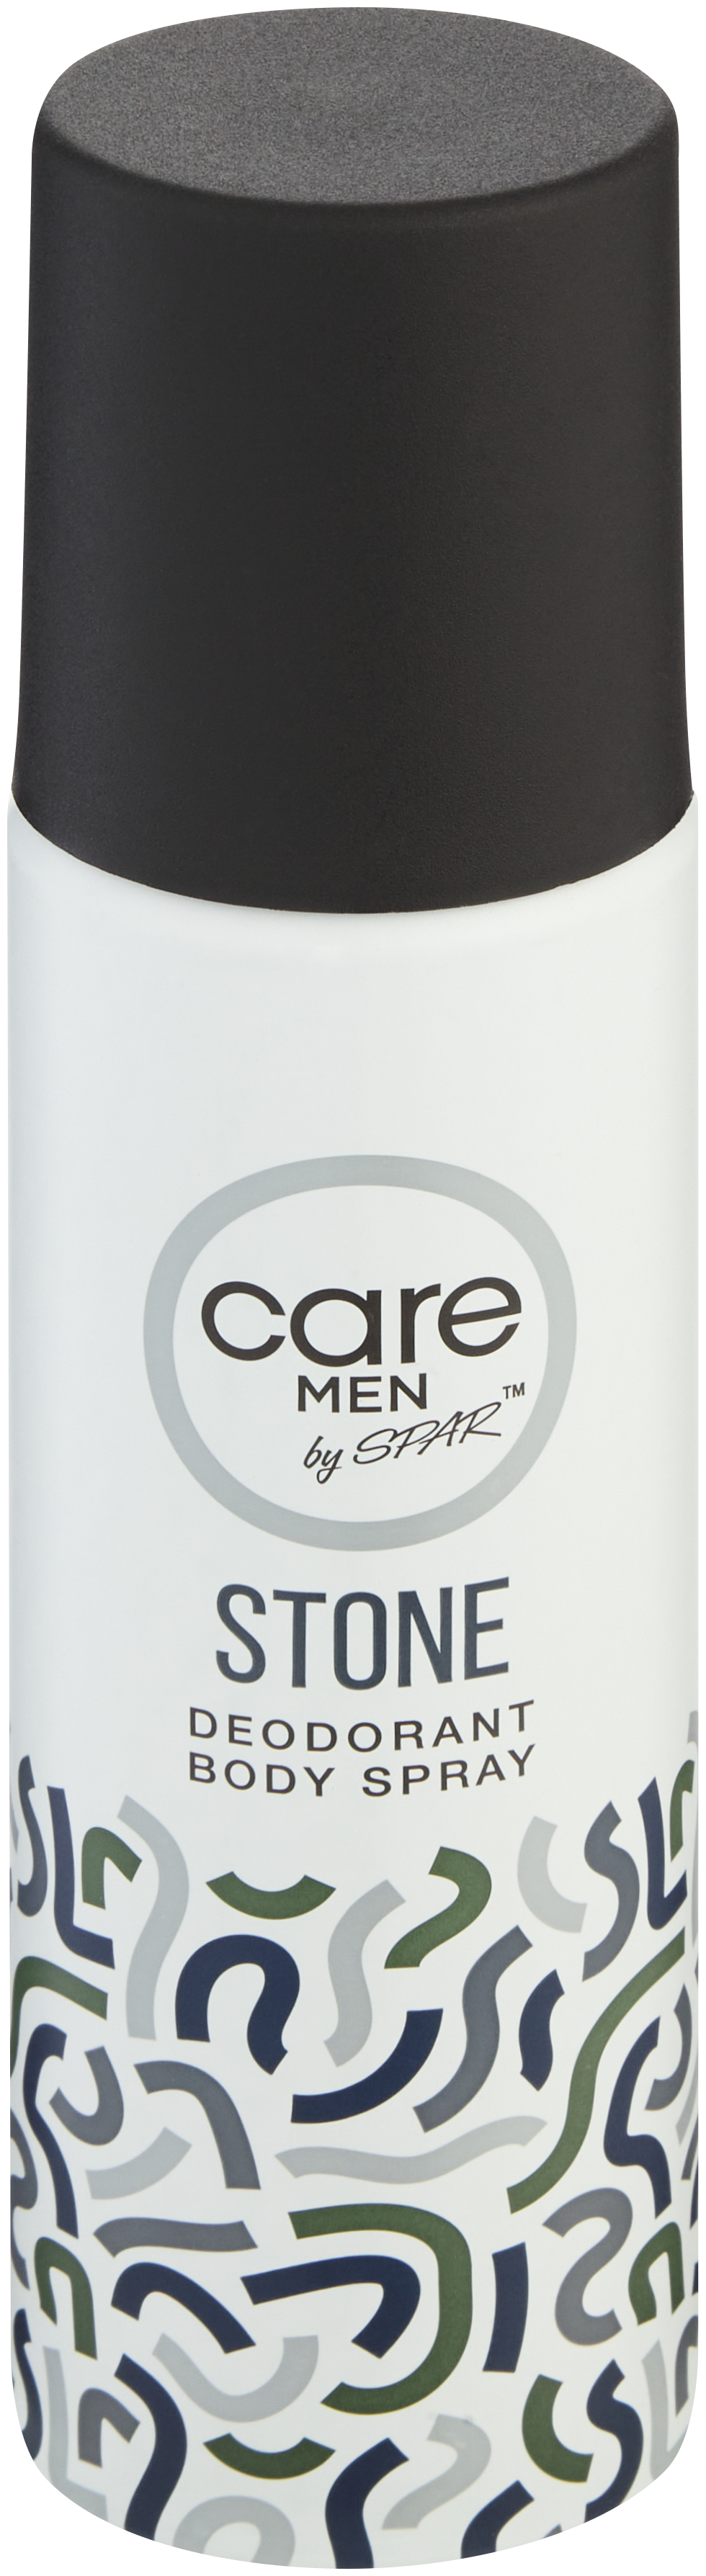 care by spar men deo stone